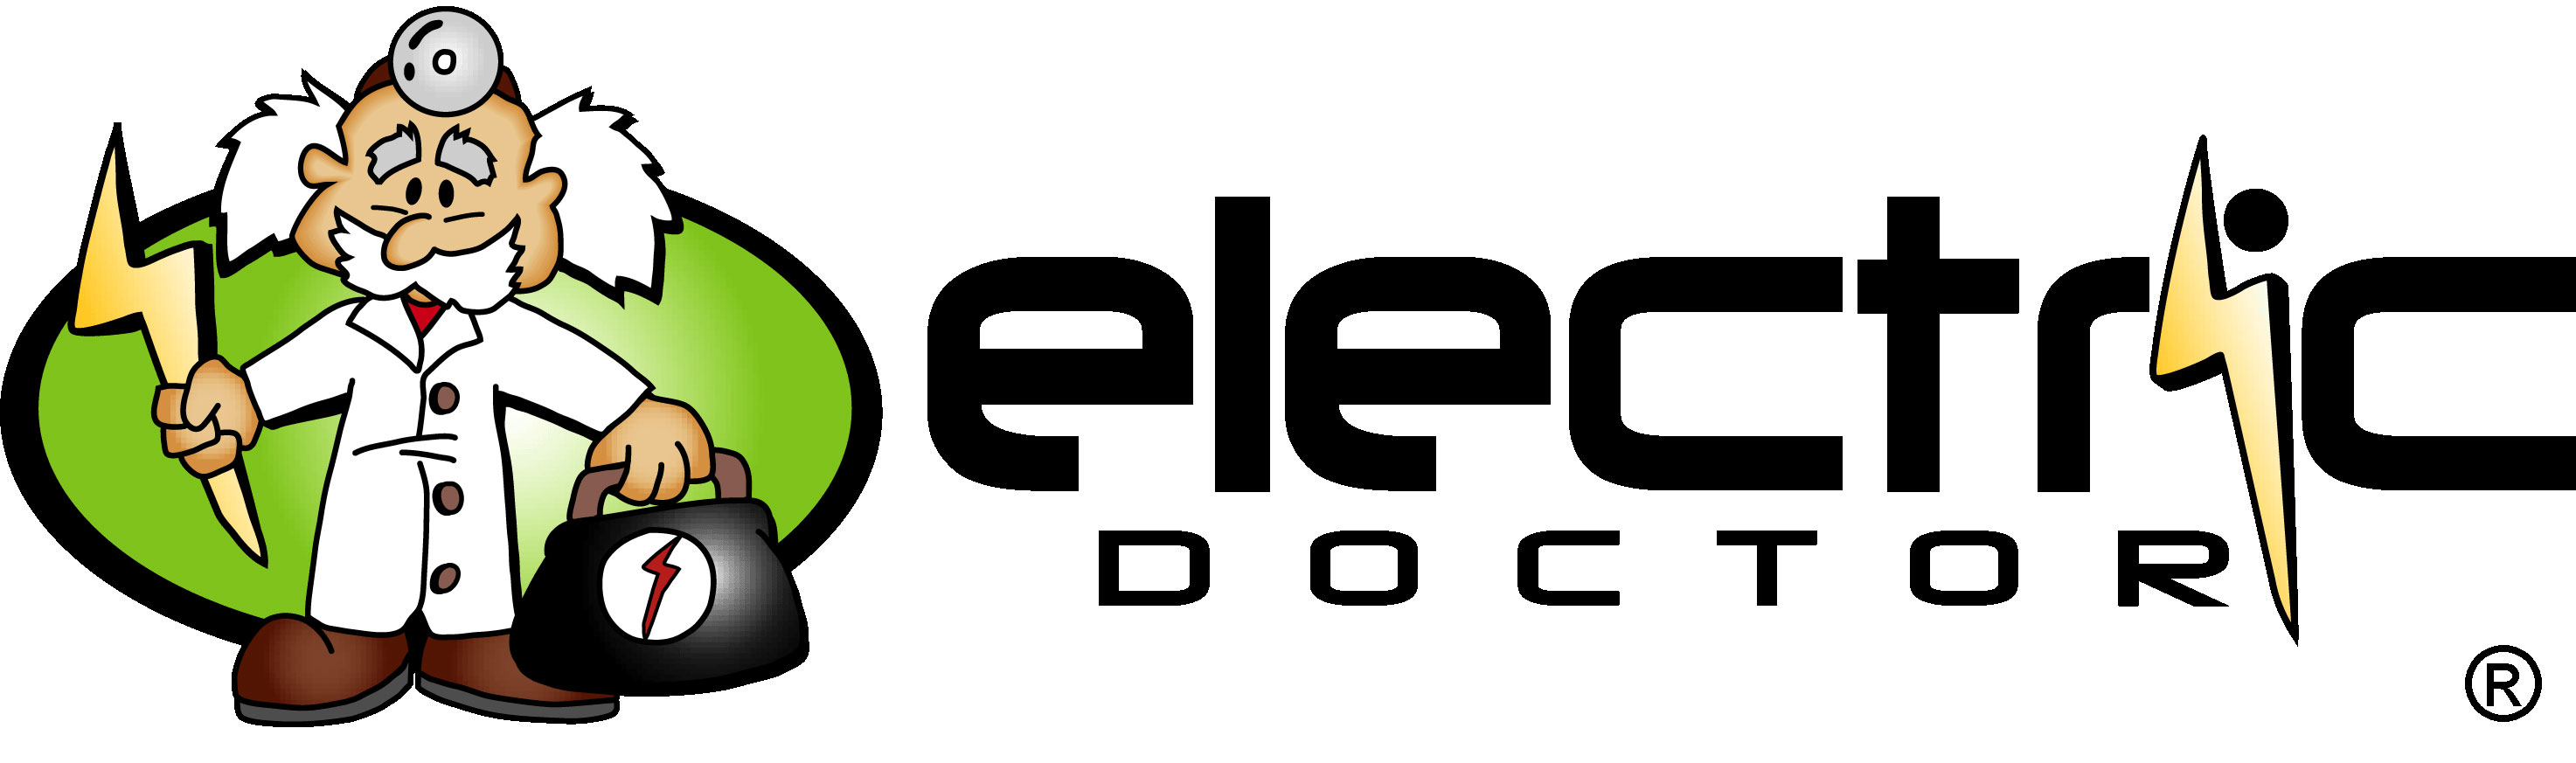 ELECTRIC DOCTOR SERVICE LLC Logo